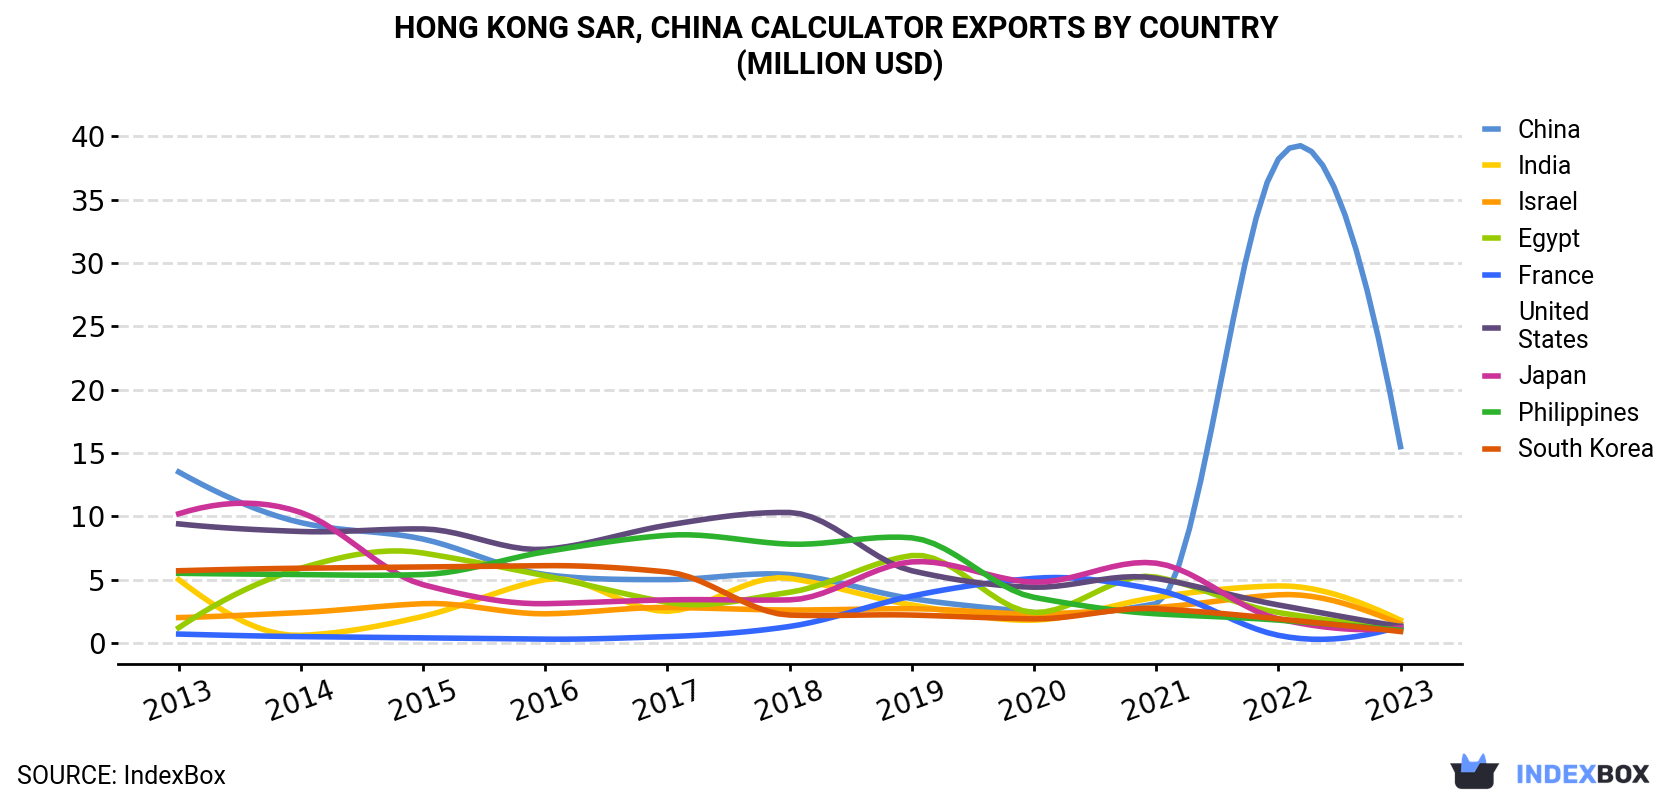 Hong Kong Calculator Exports By Country (Million USD)